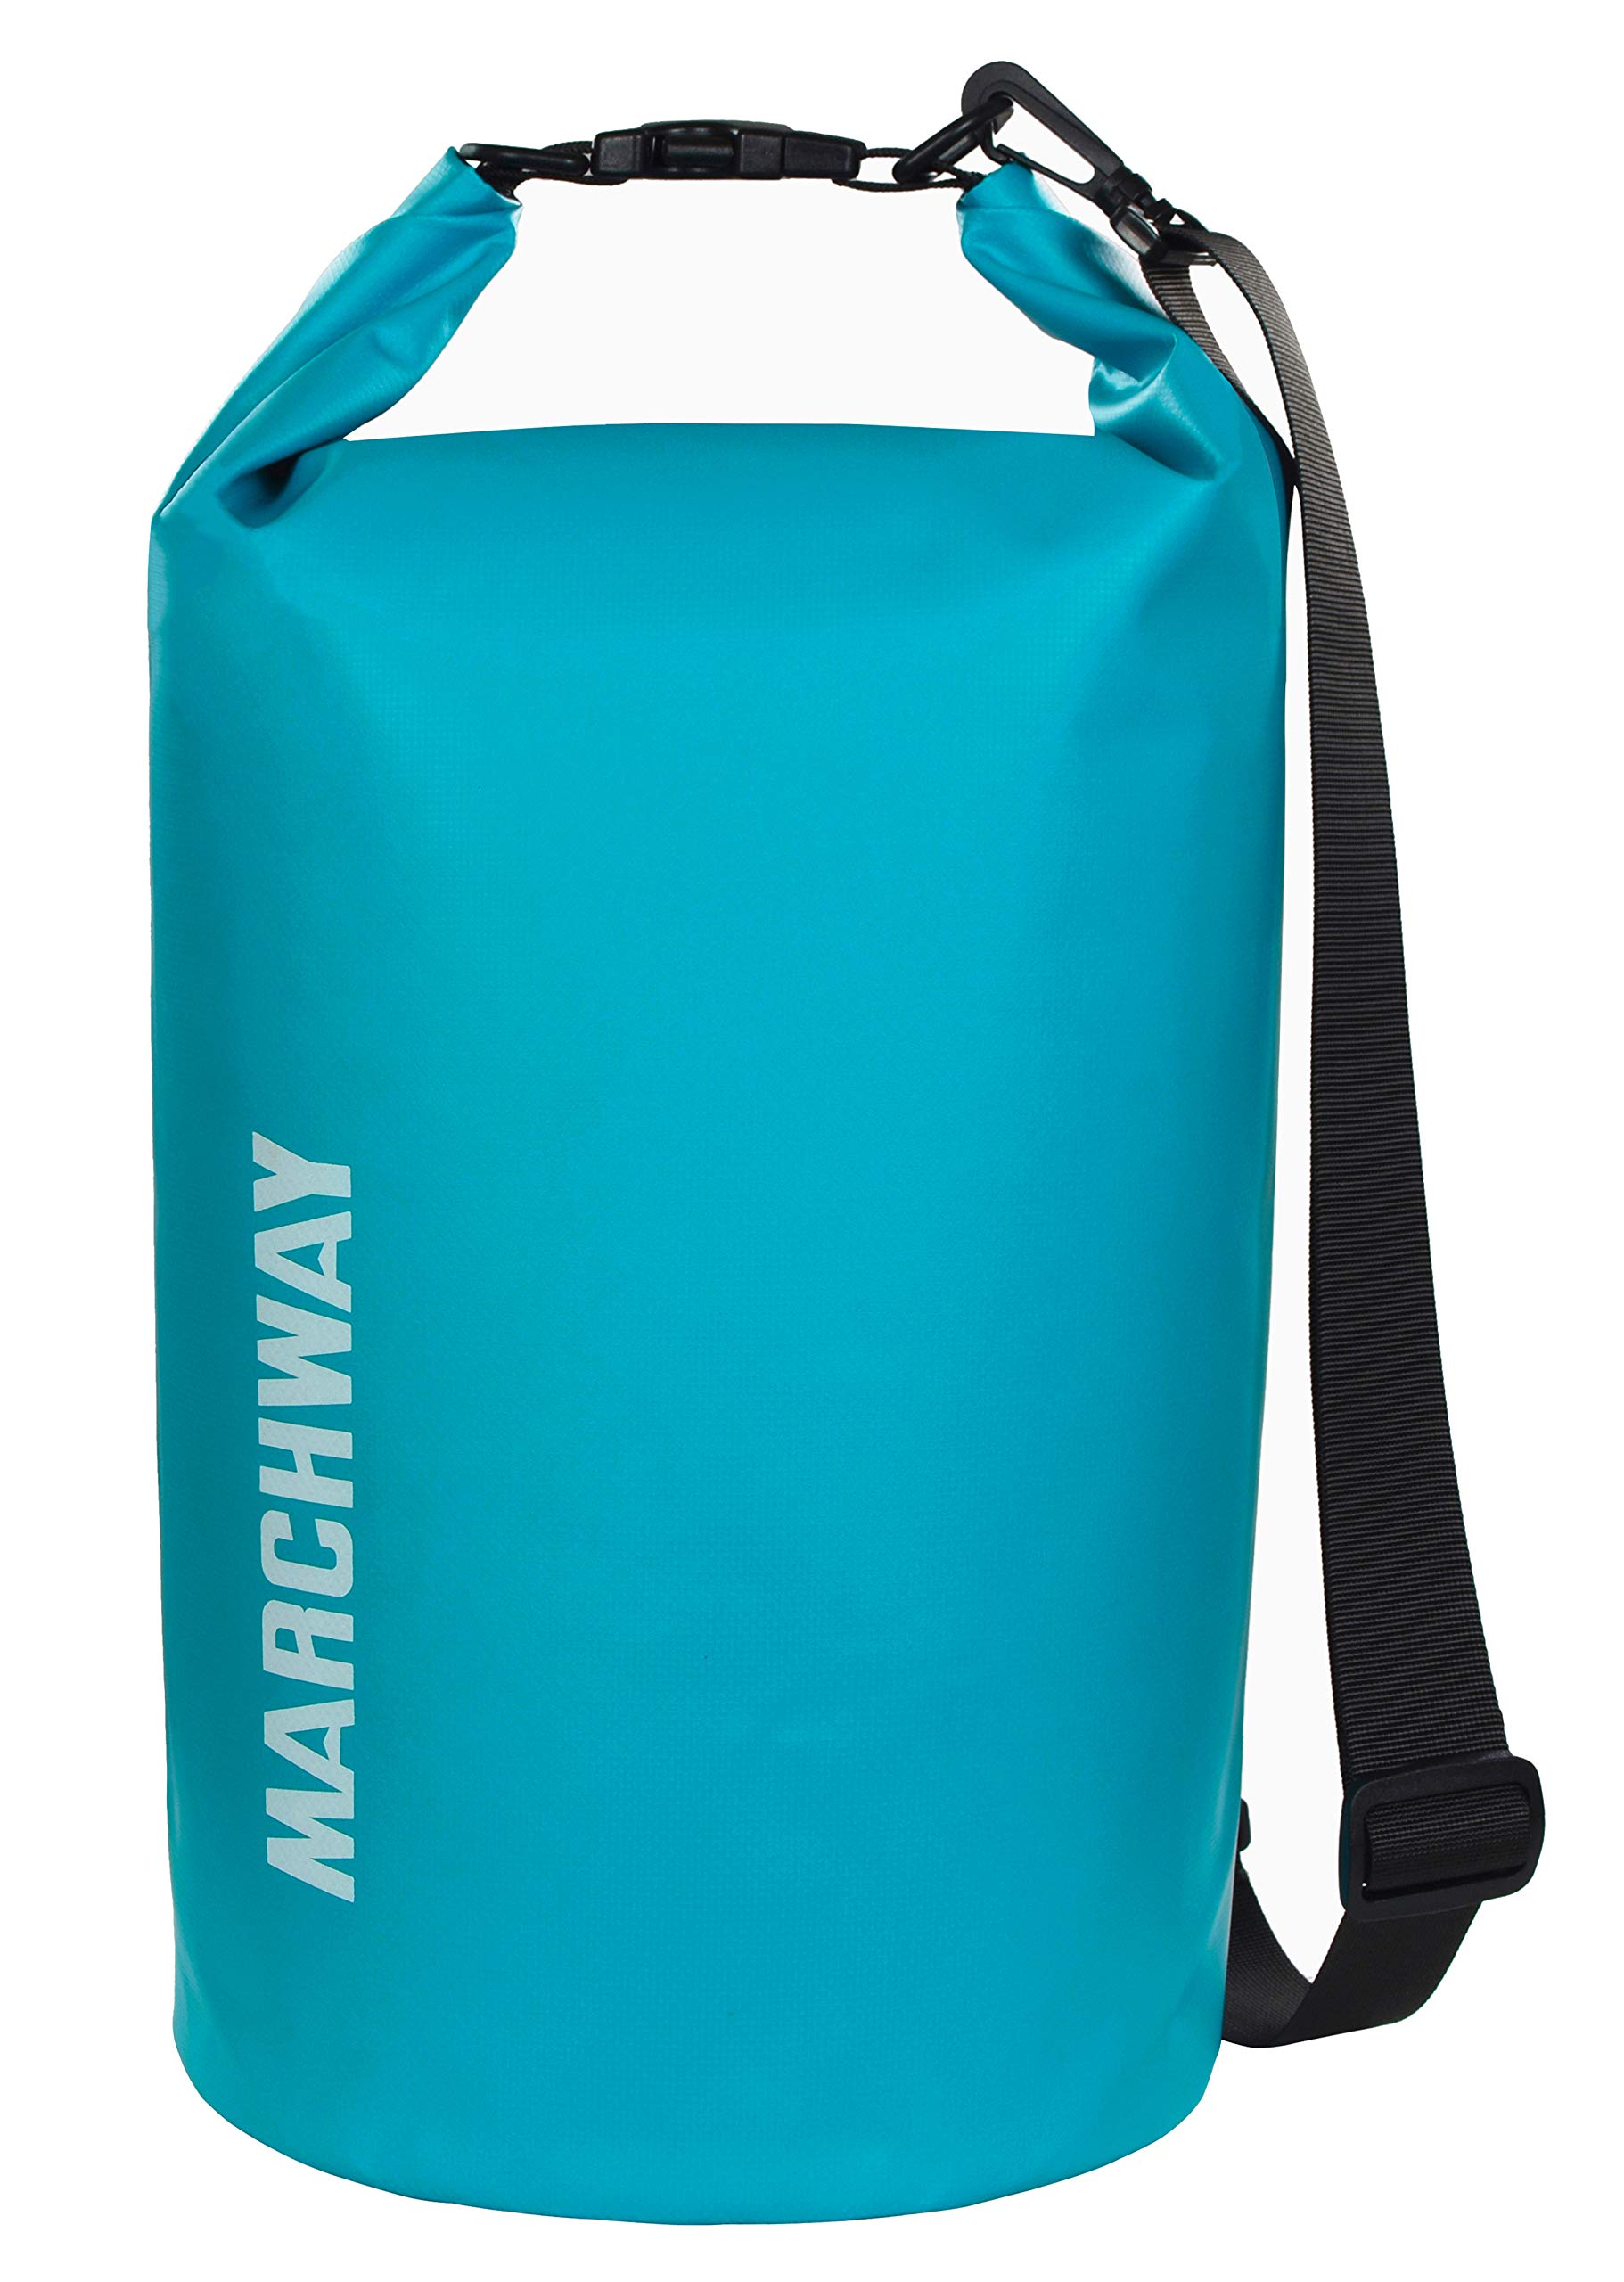 MARCHWAY Floating Waterproof Dry Bag 5L/10L/20L/30L/40L, Roll Top Sack  Keeps Gear Dry